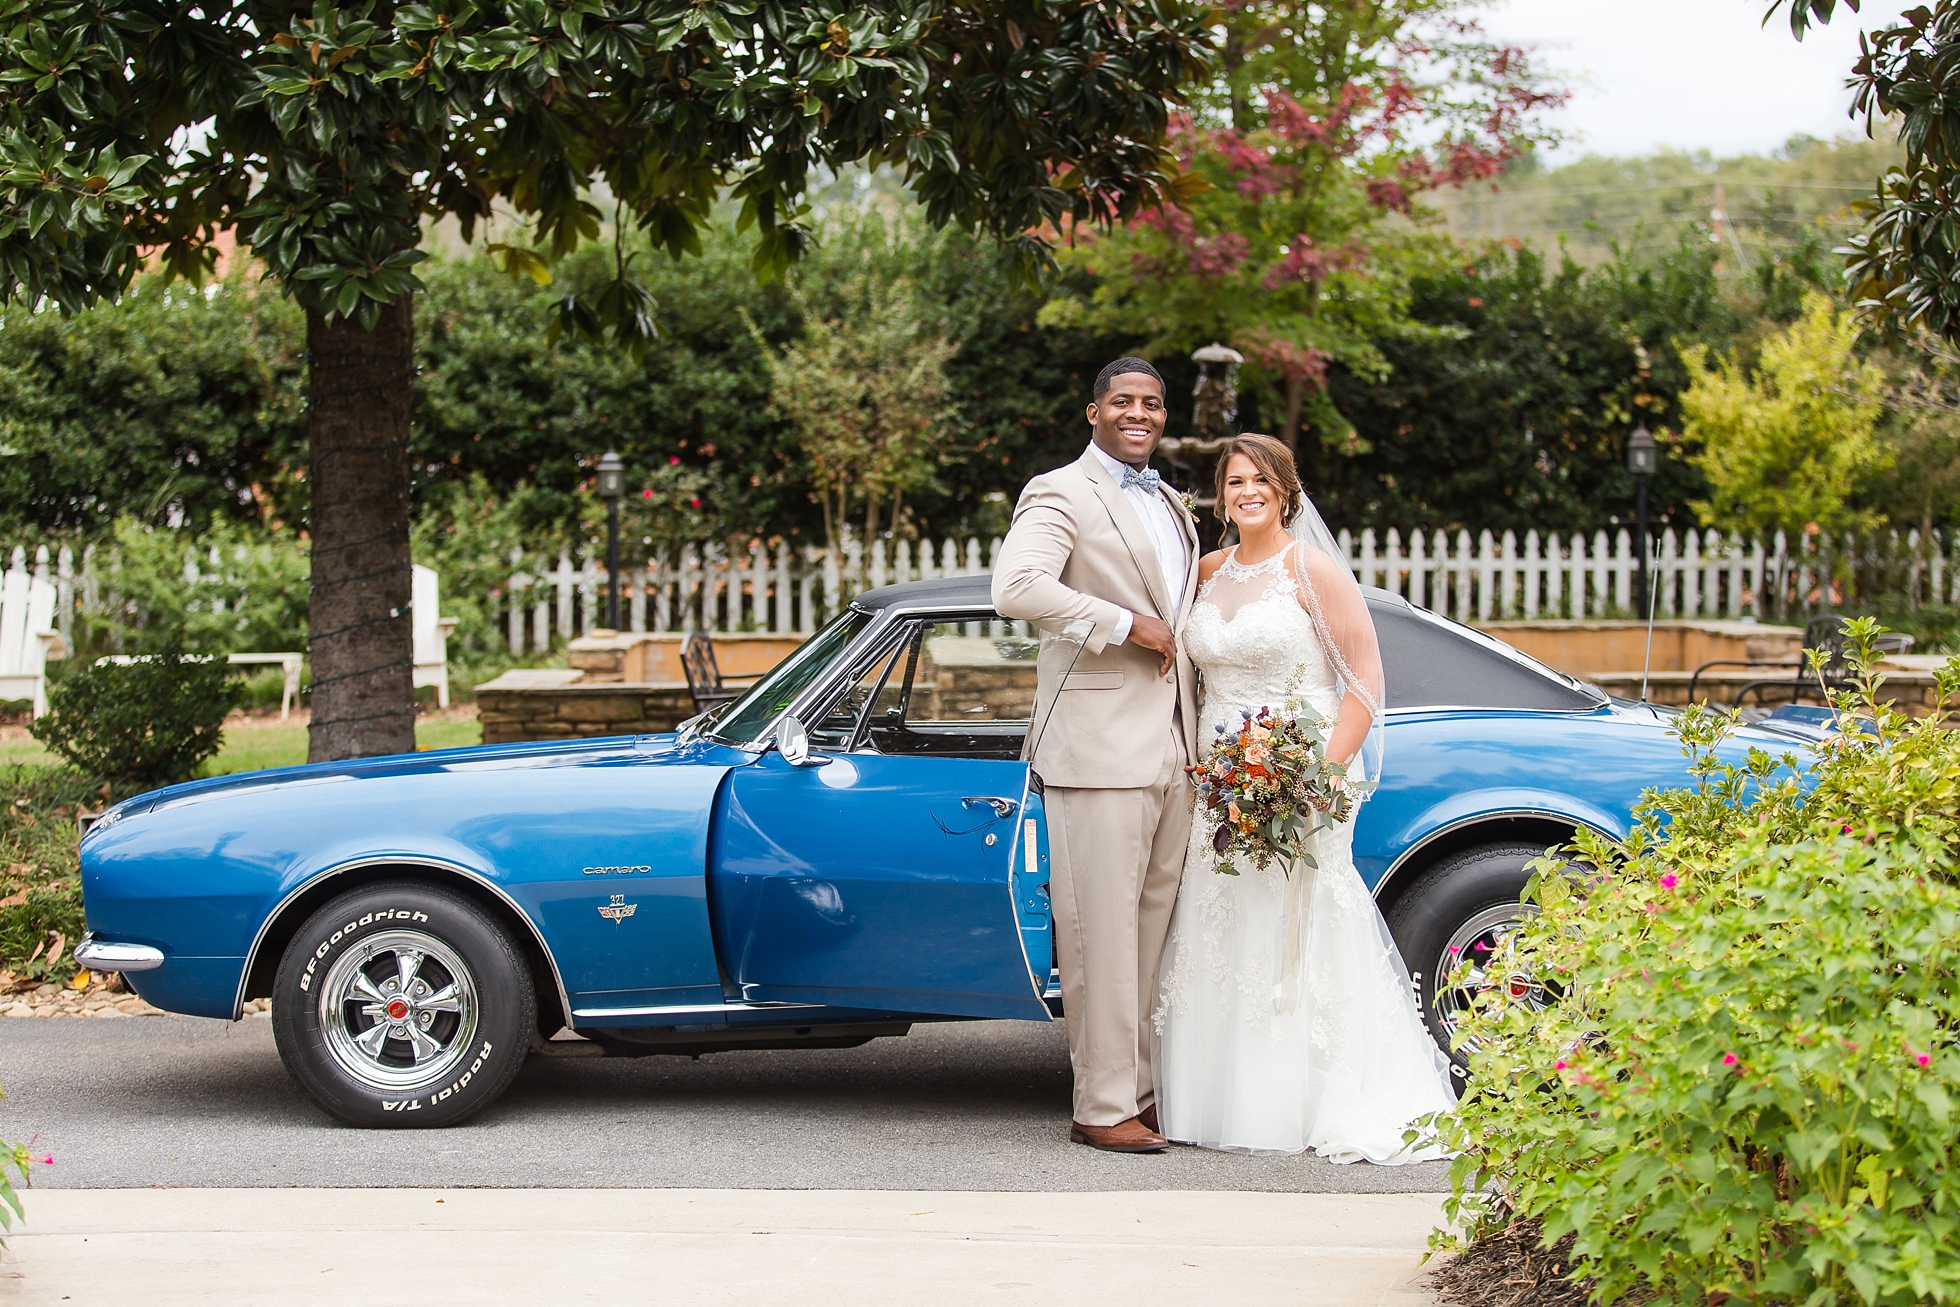 chevy blue vintage car wedding photos